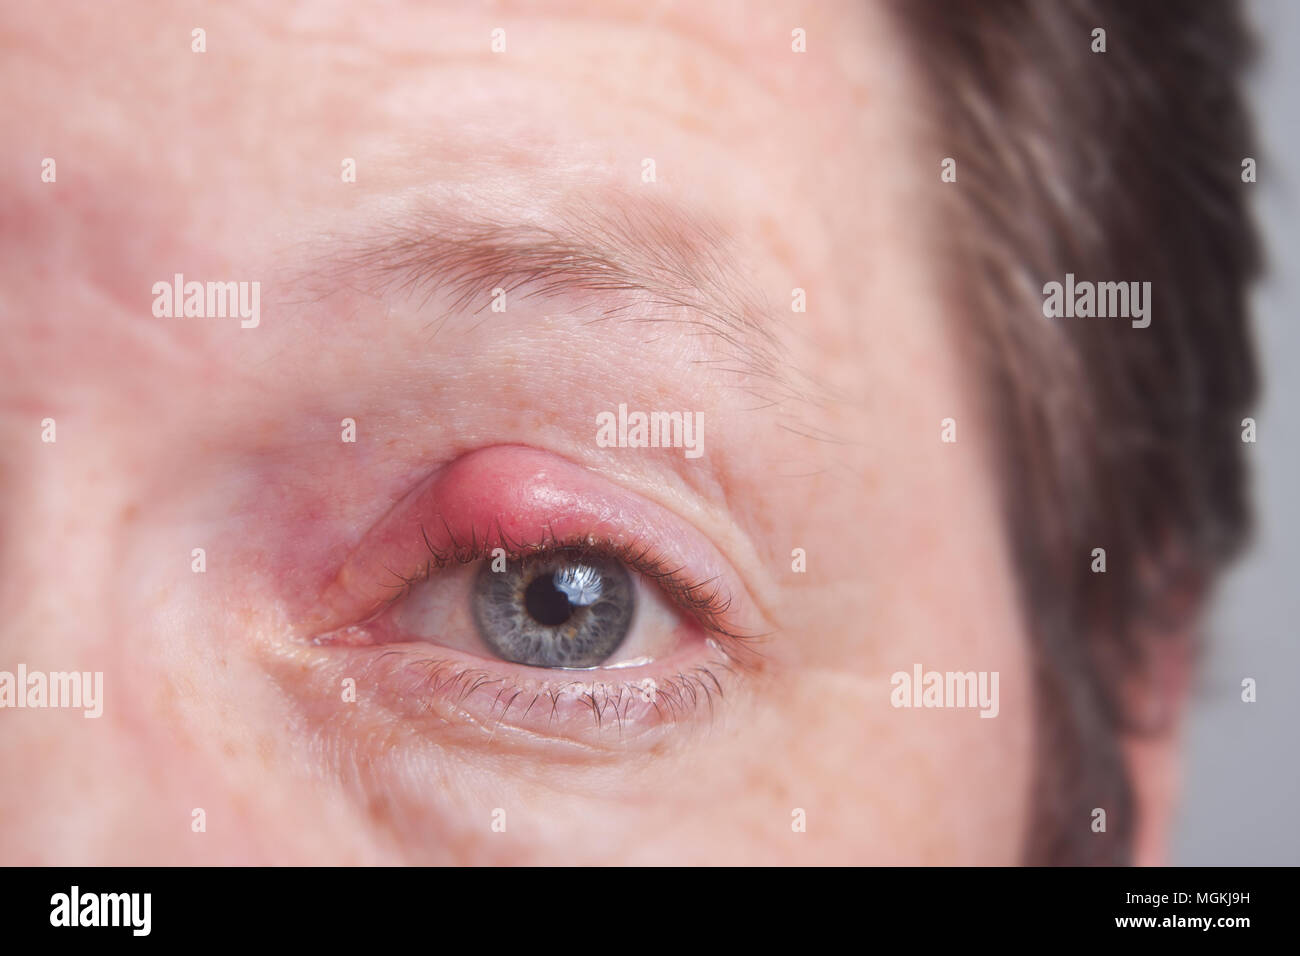 Dolorosamente sty ojo rojo, ojo purulento infectados Foto de stock